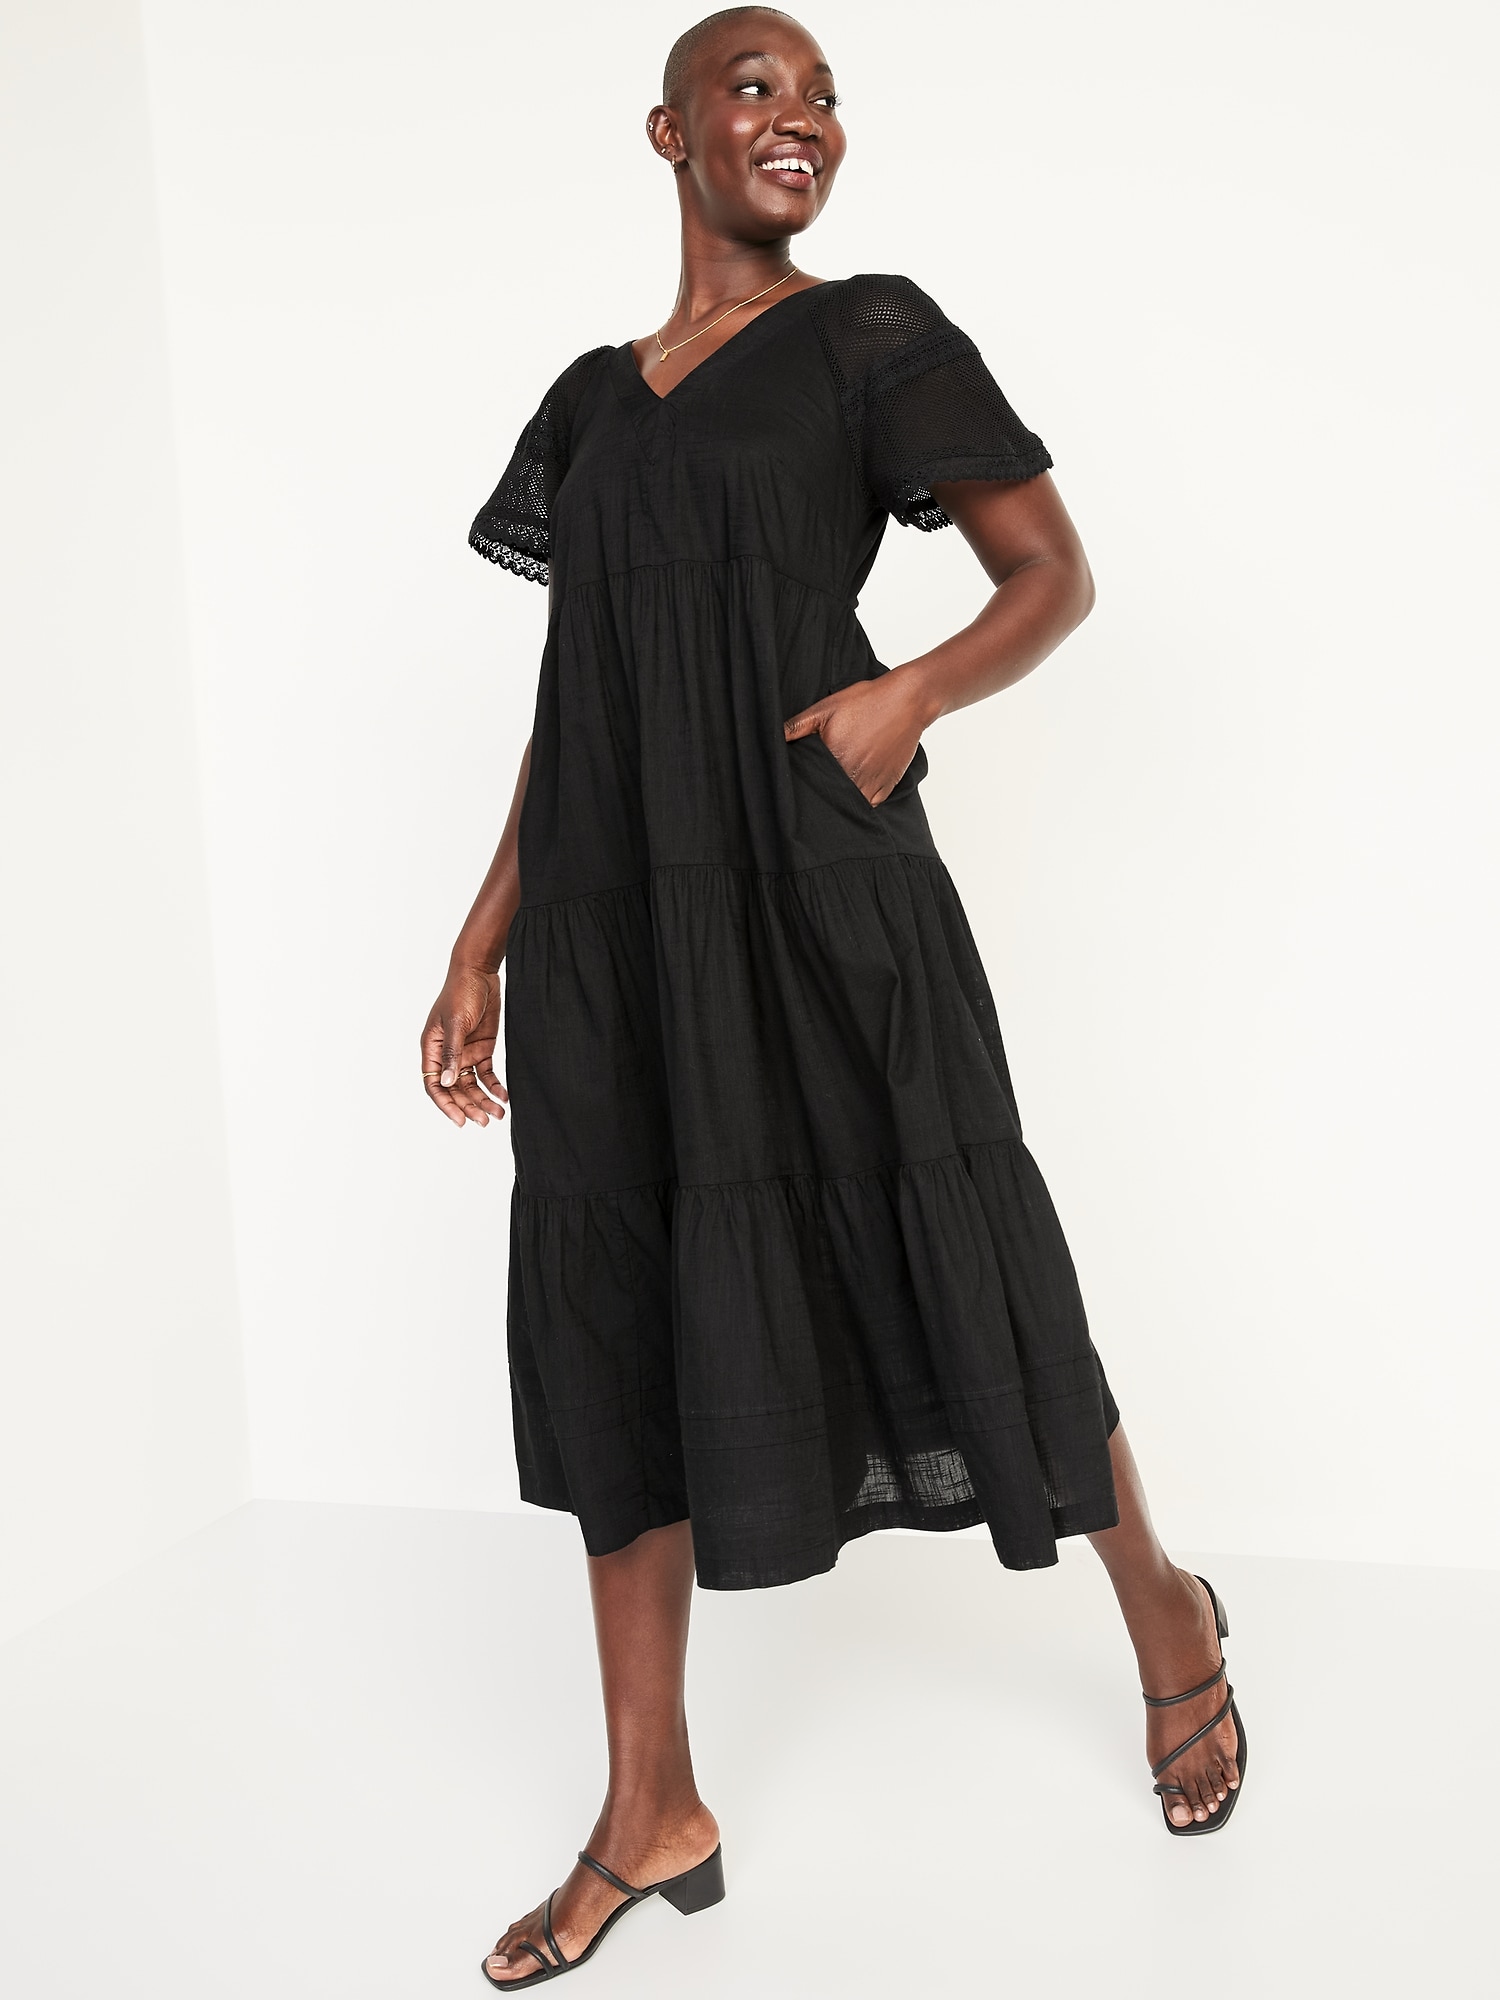 Old Navy Women's Black Lace Up Swing Dress Size 3X 